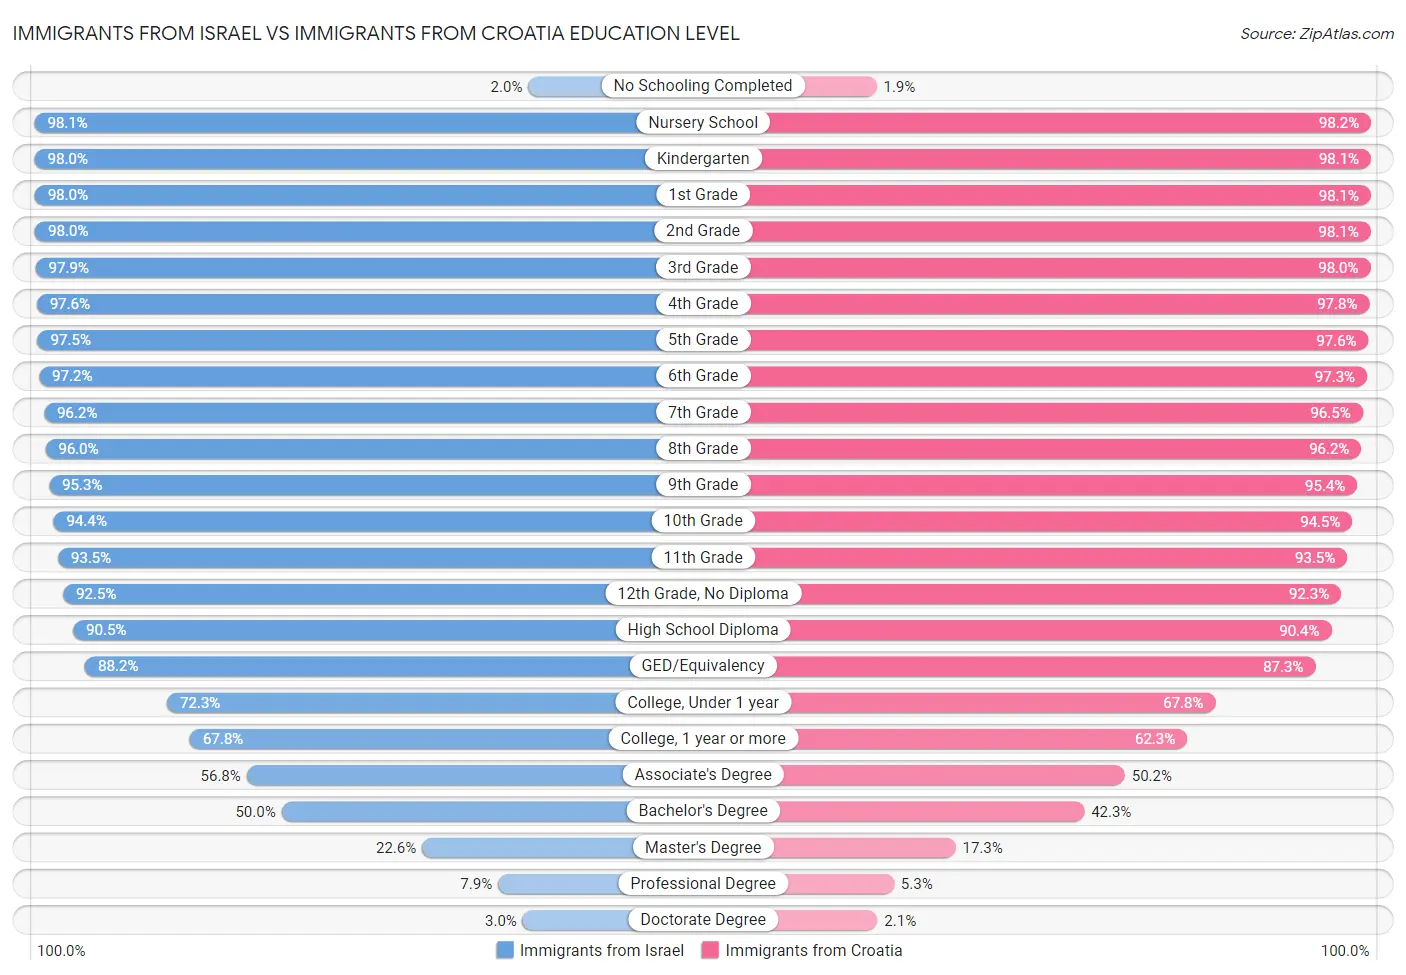 Immigrants from Israel vs Immigrants from Croatia Education Level